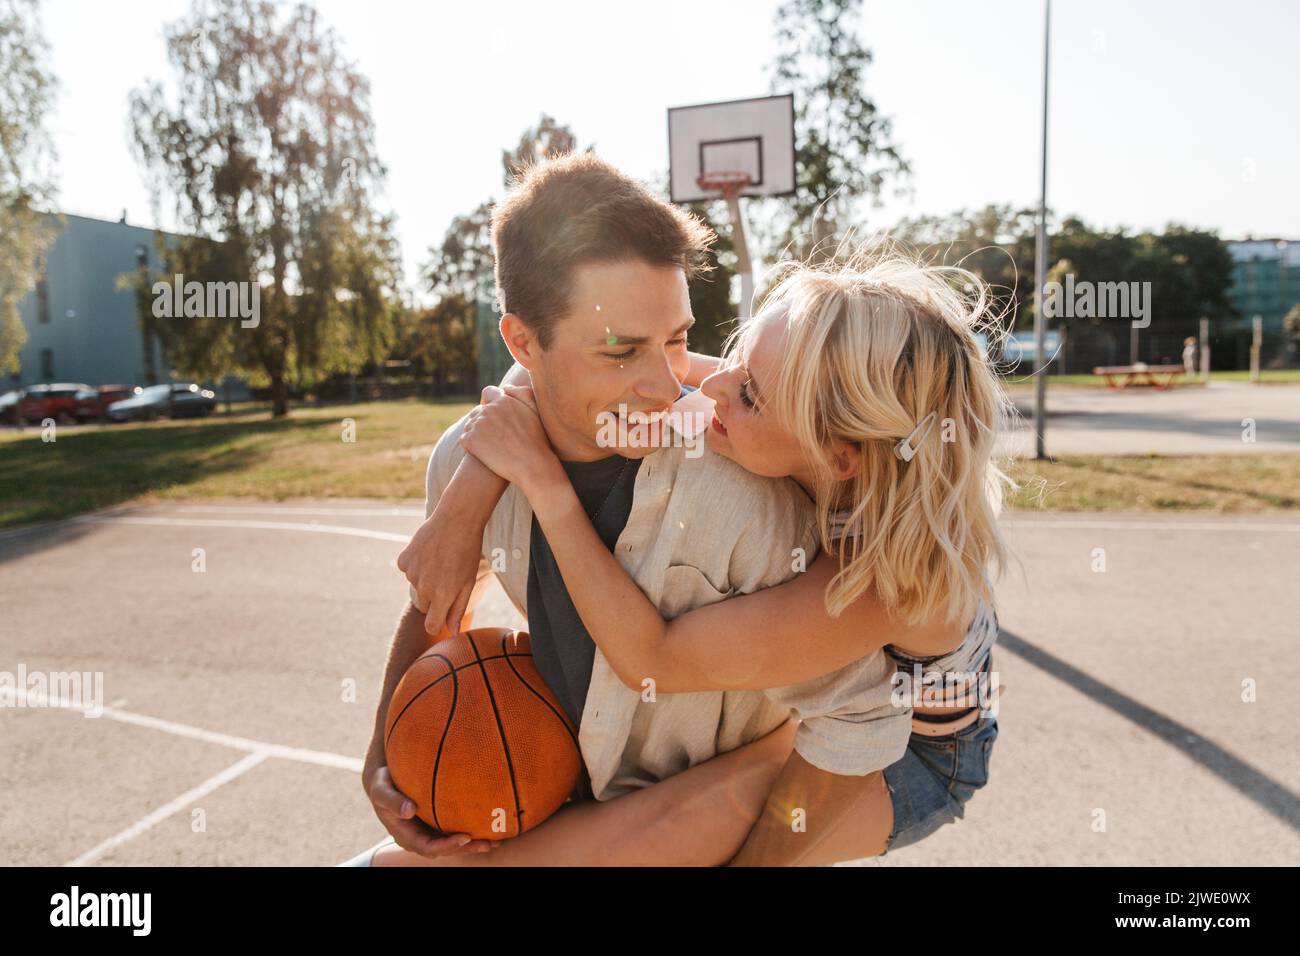 happy couple having fun on basketball playground Stock Photo